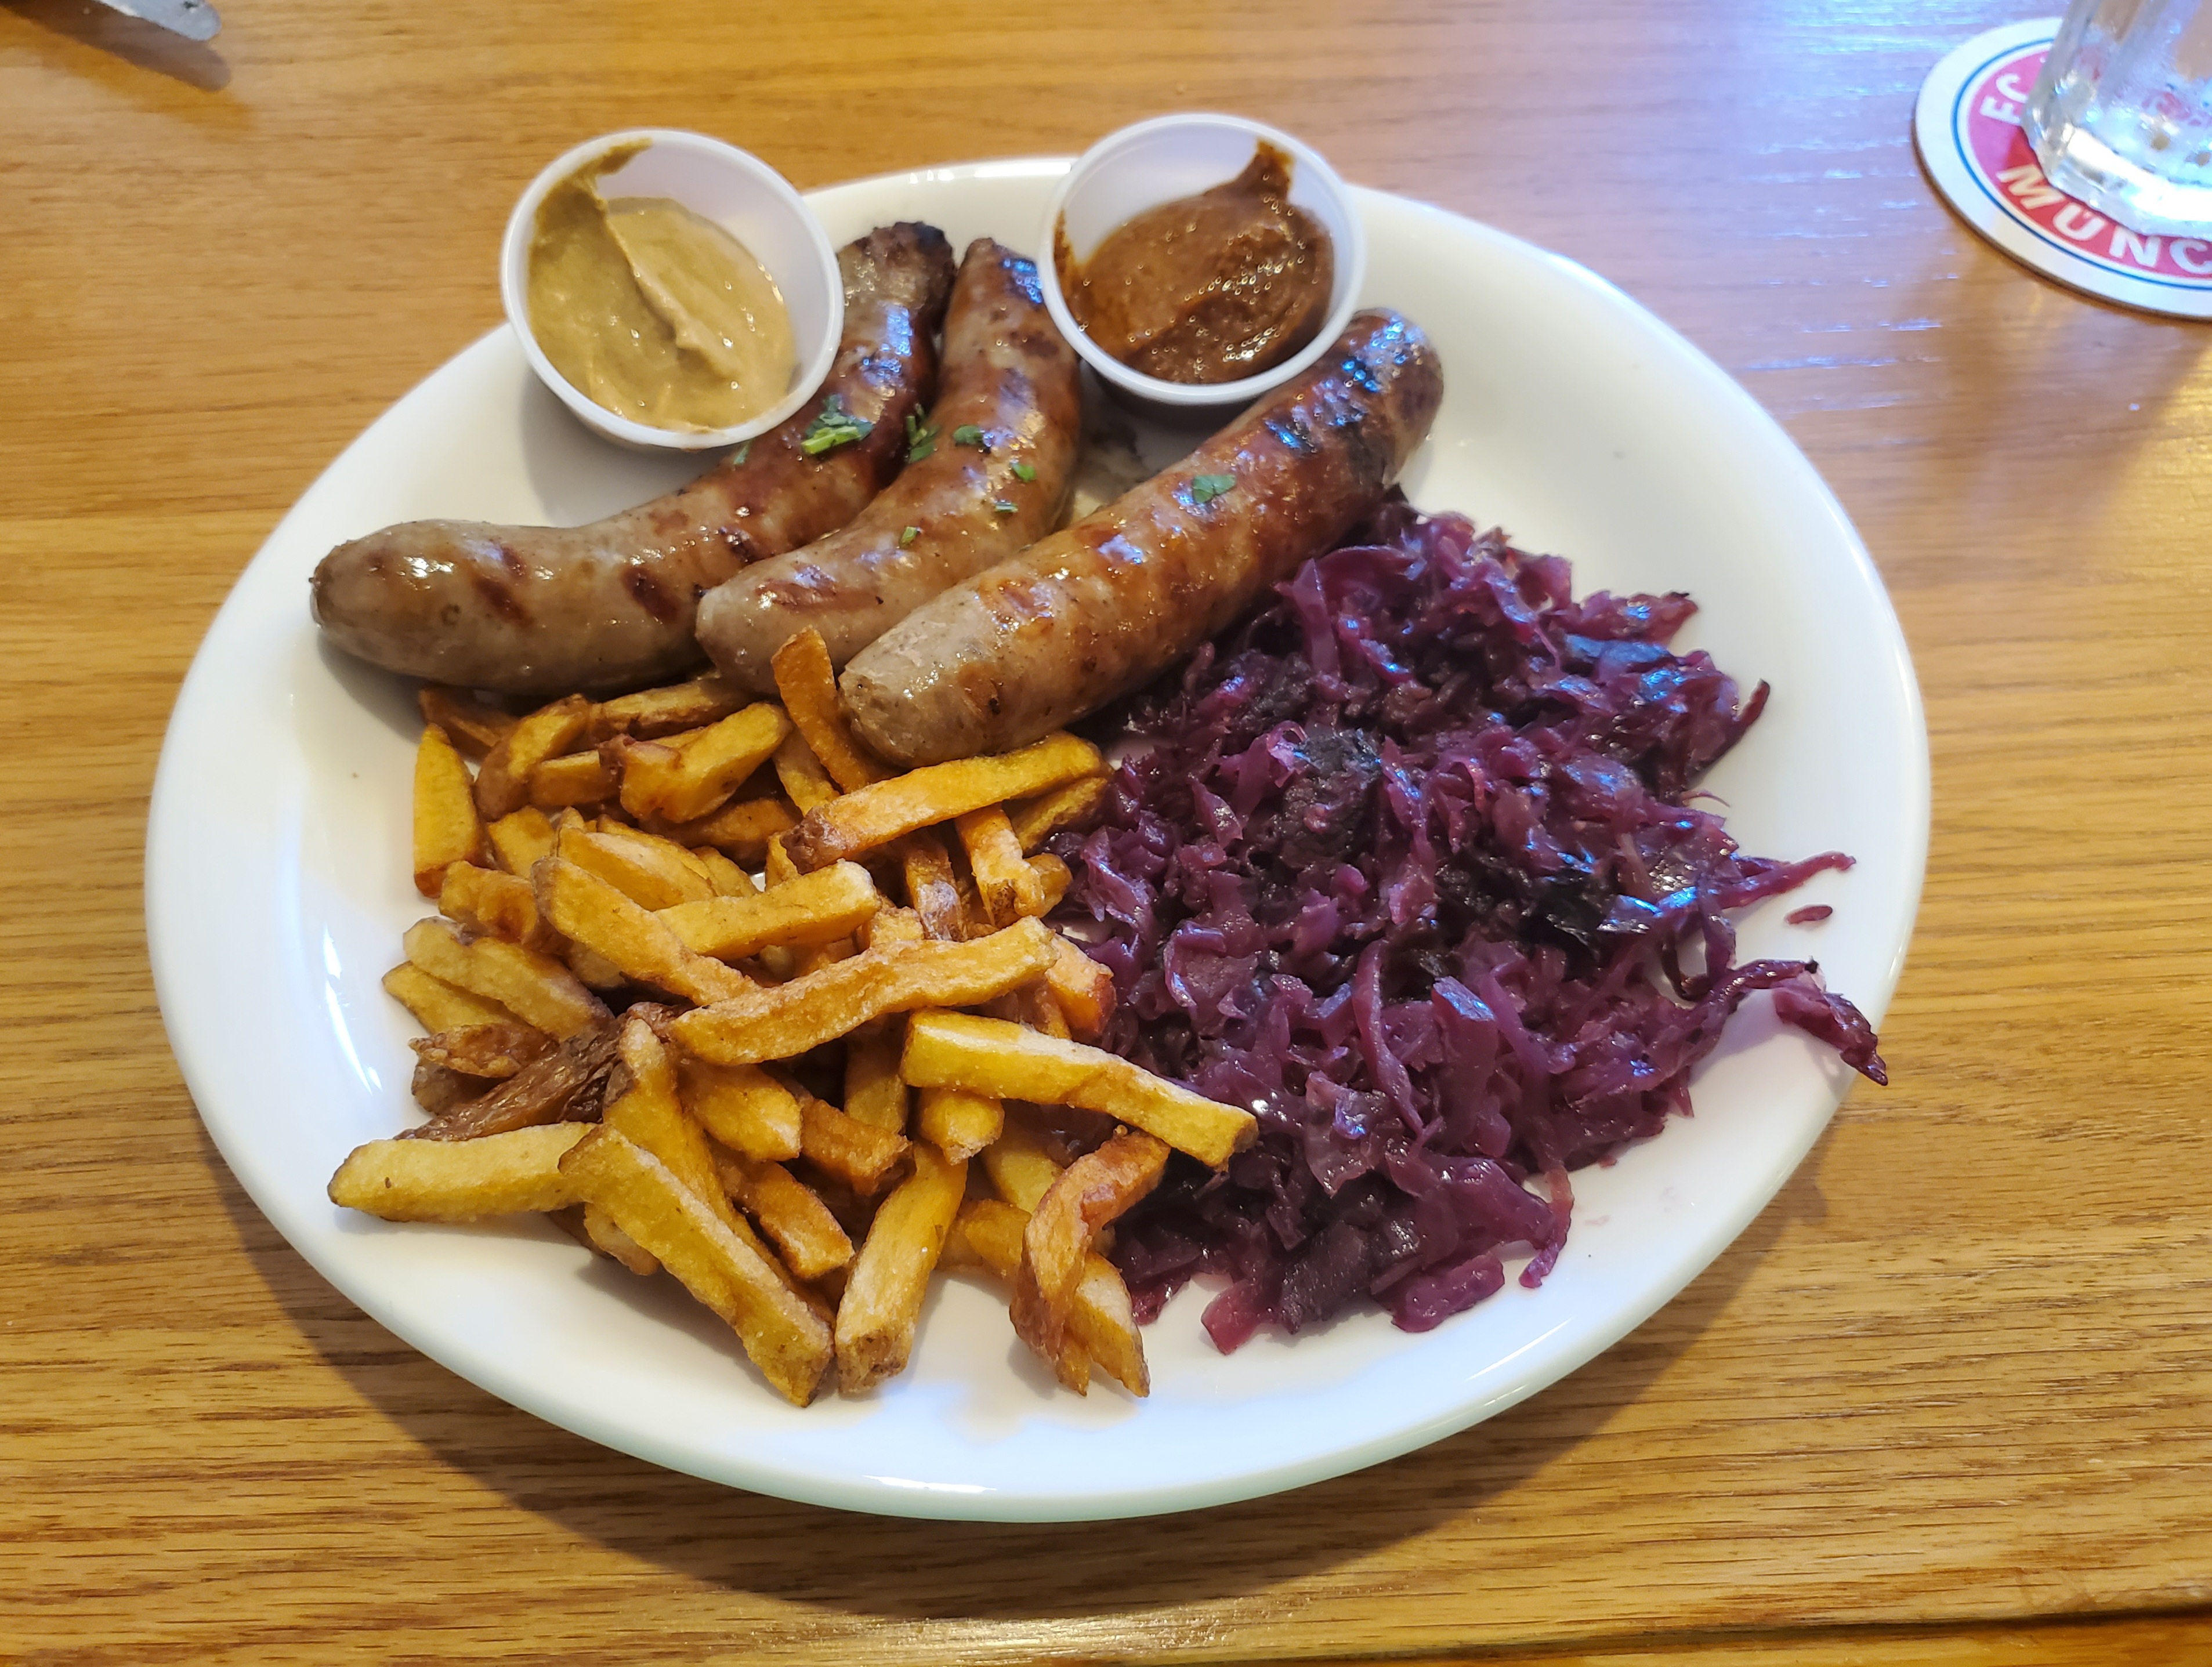 The sausage platter at Horsch Radish. Photo by Carl Busch.